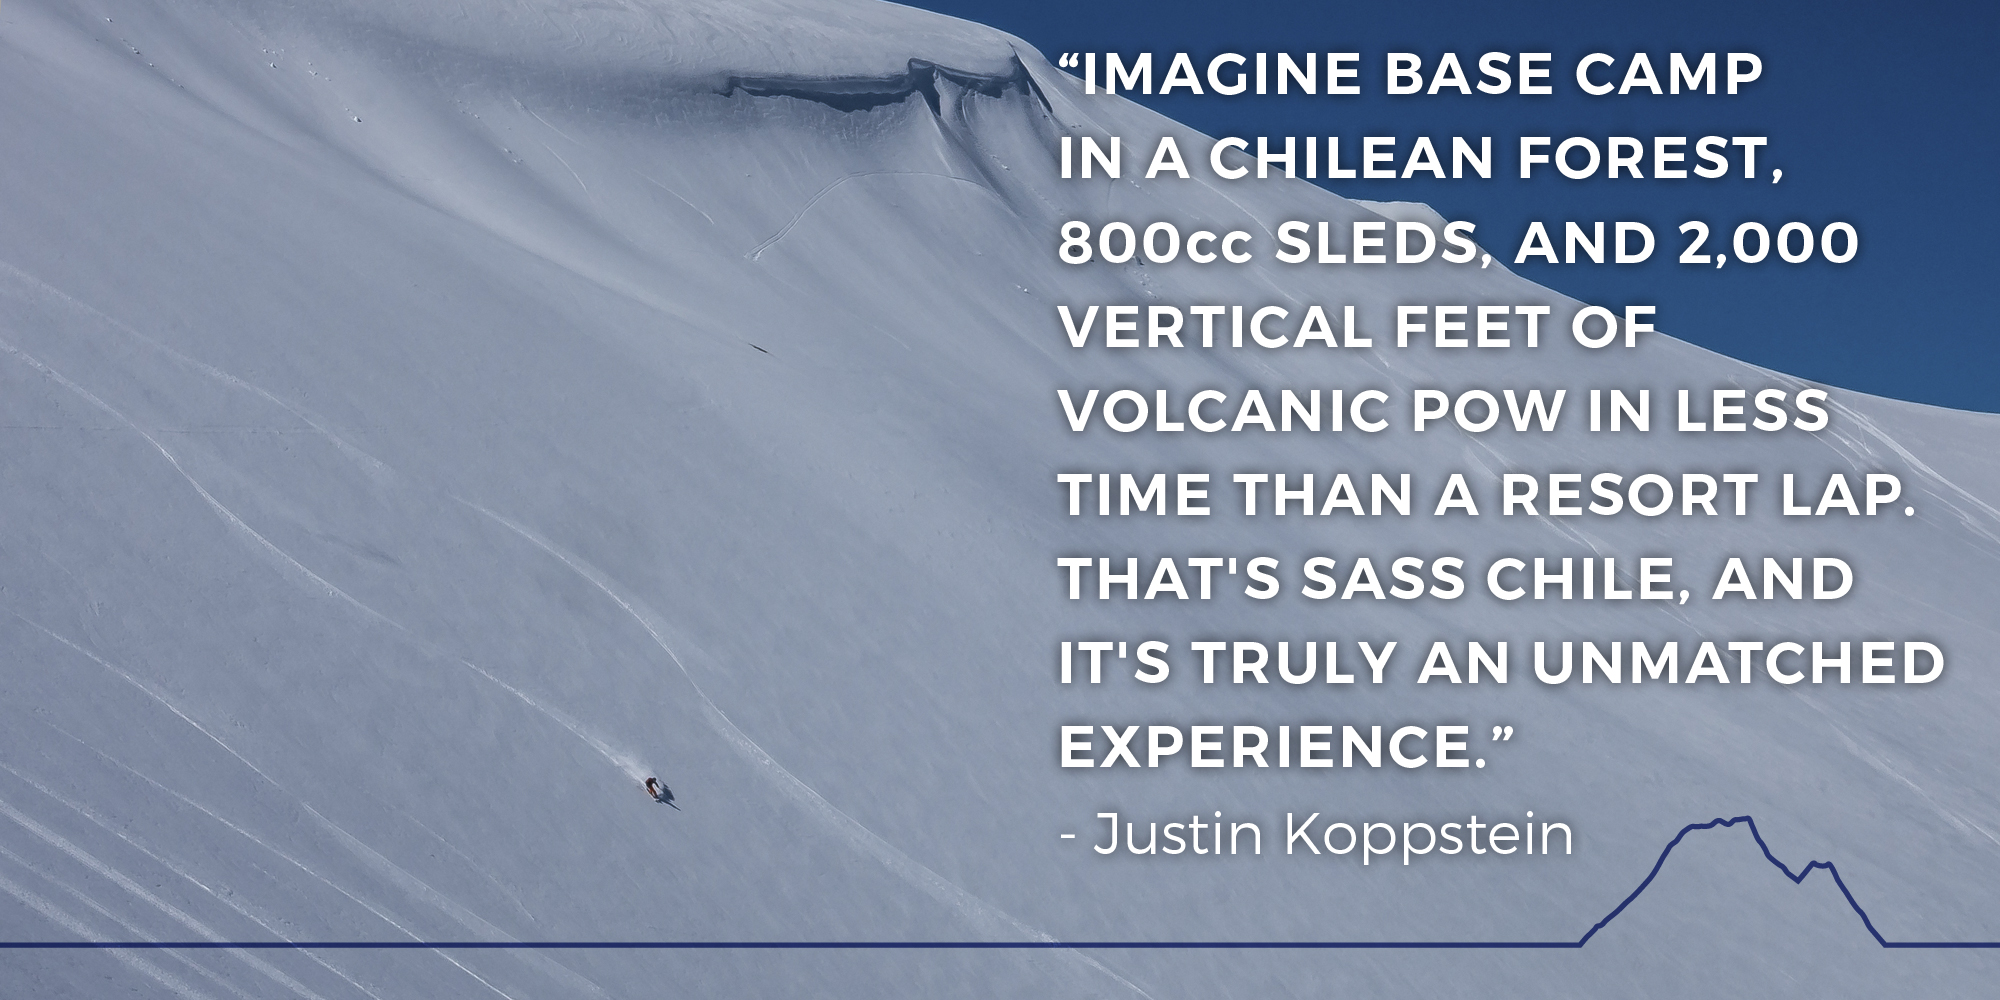 Imagine base camp in a Chilean forest, 800cc sleds, and 2,000 vertical feet of volcanic pow in less time than a resort lap. That's SASS Chile, and it's truly an unmatched experience.